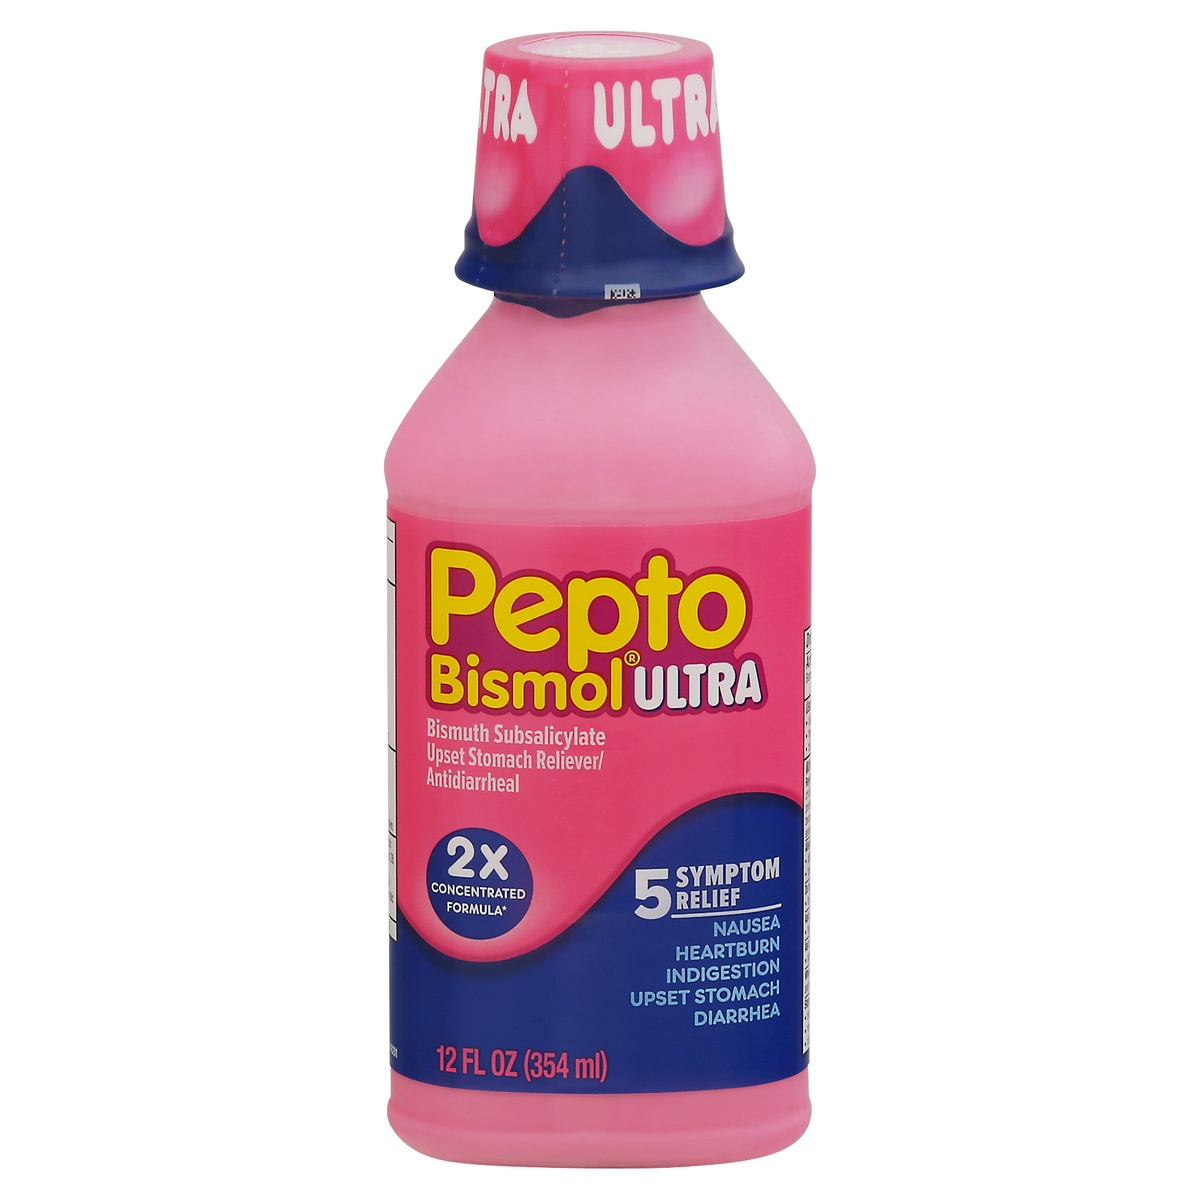 slide 1 of 1, Pepto-Bismol Liquid Ultra for Nausea, Heartburn, Indigestion, Upset Stomach, and Diarrhea - 5 Symptom Fast Relief, Original Flavor, 12 oz, 12 oz